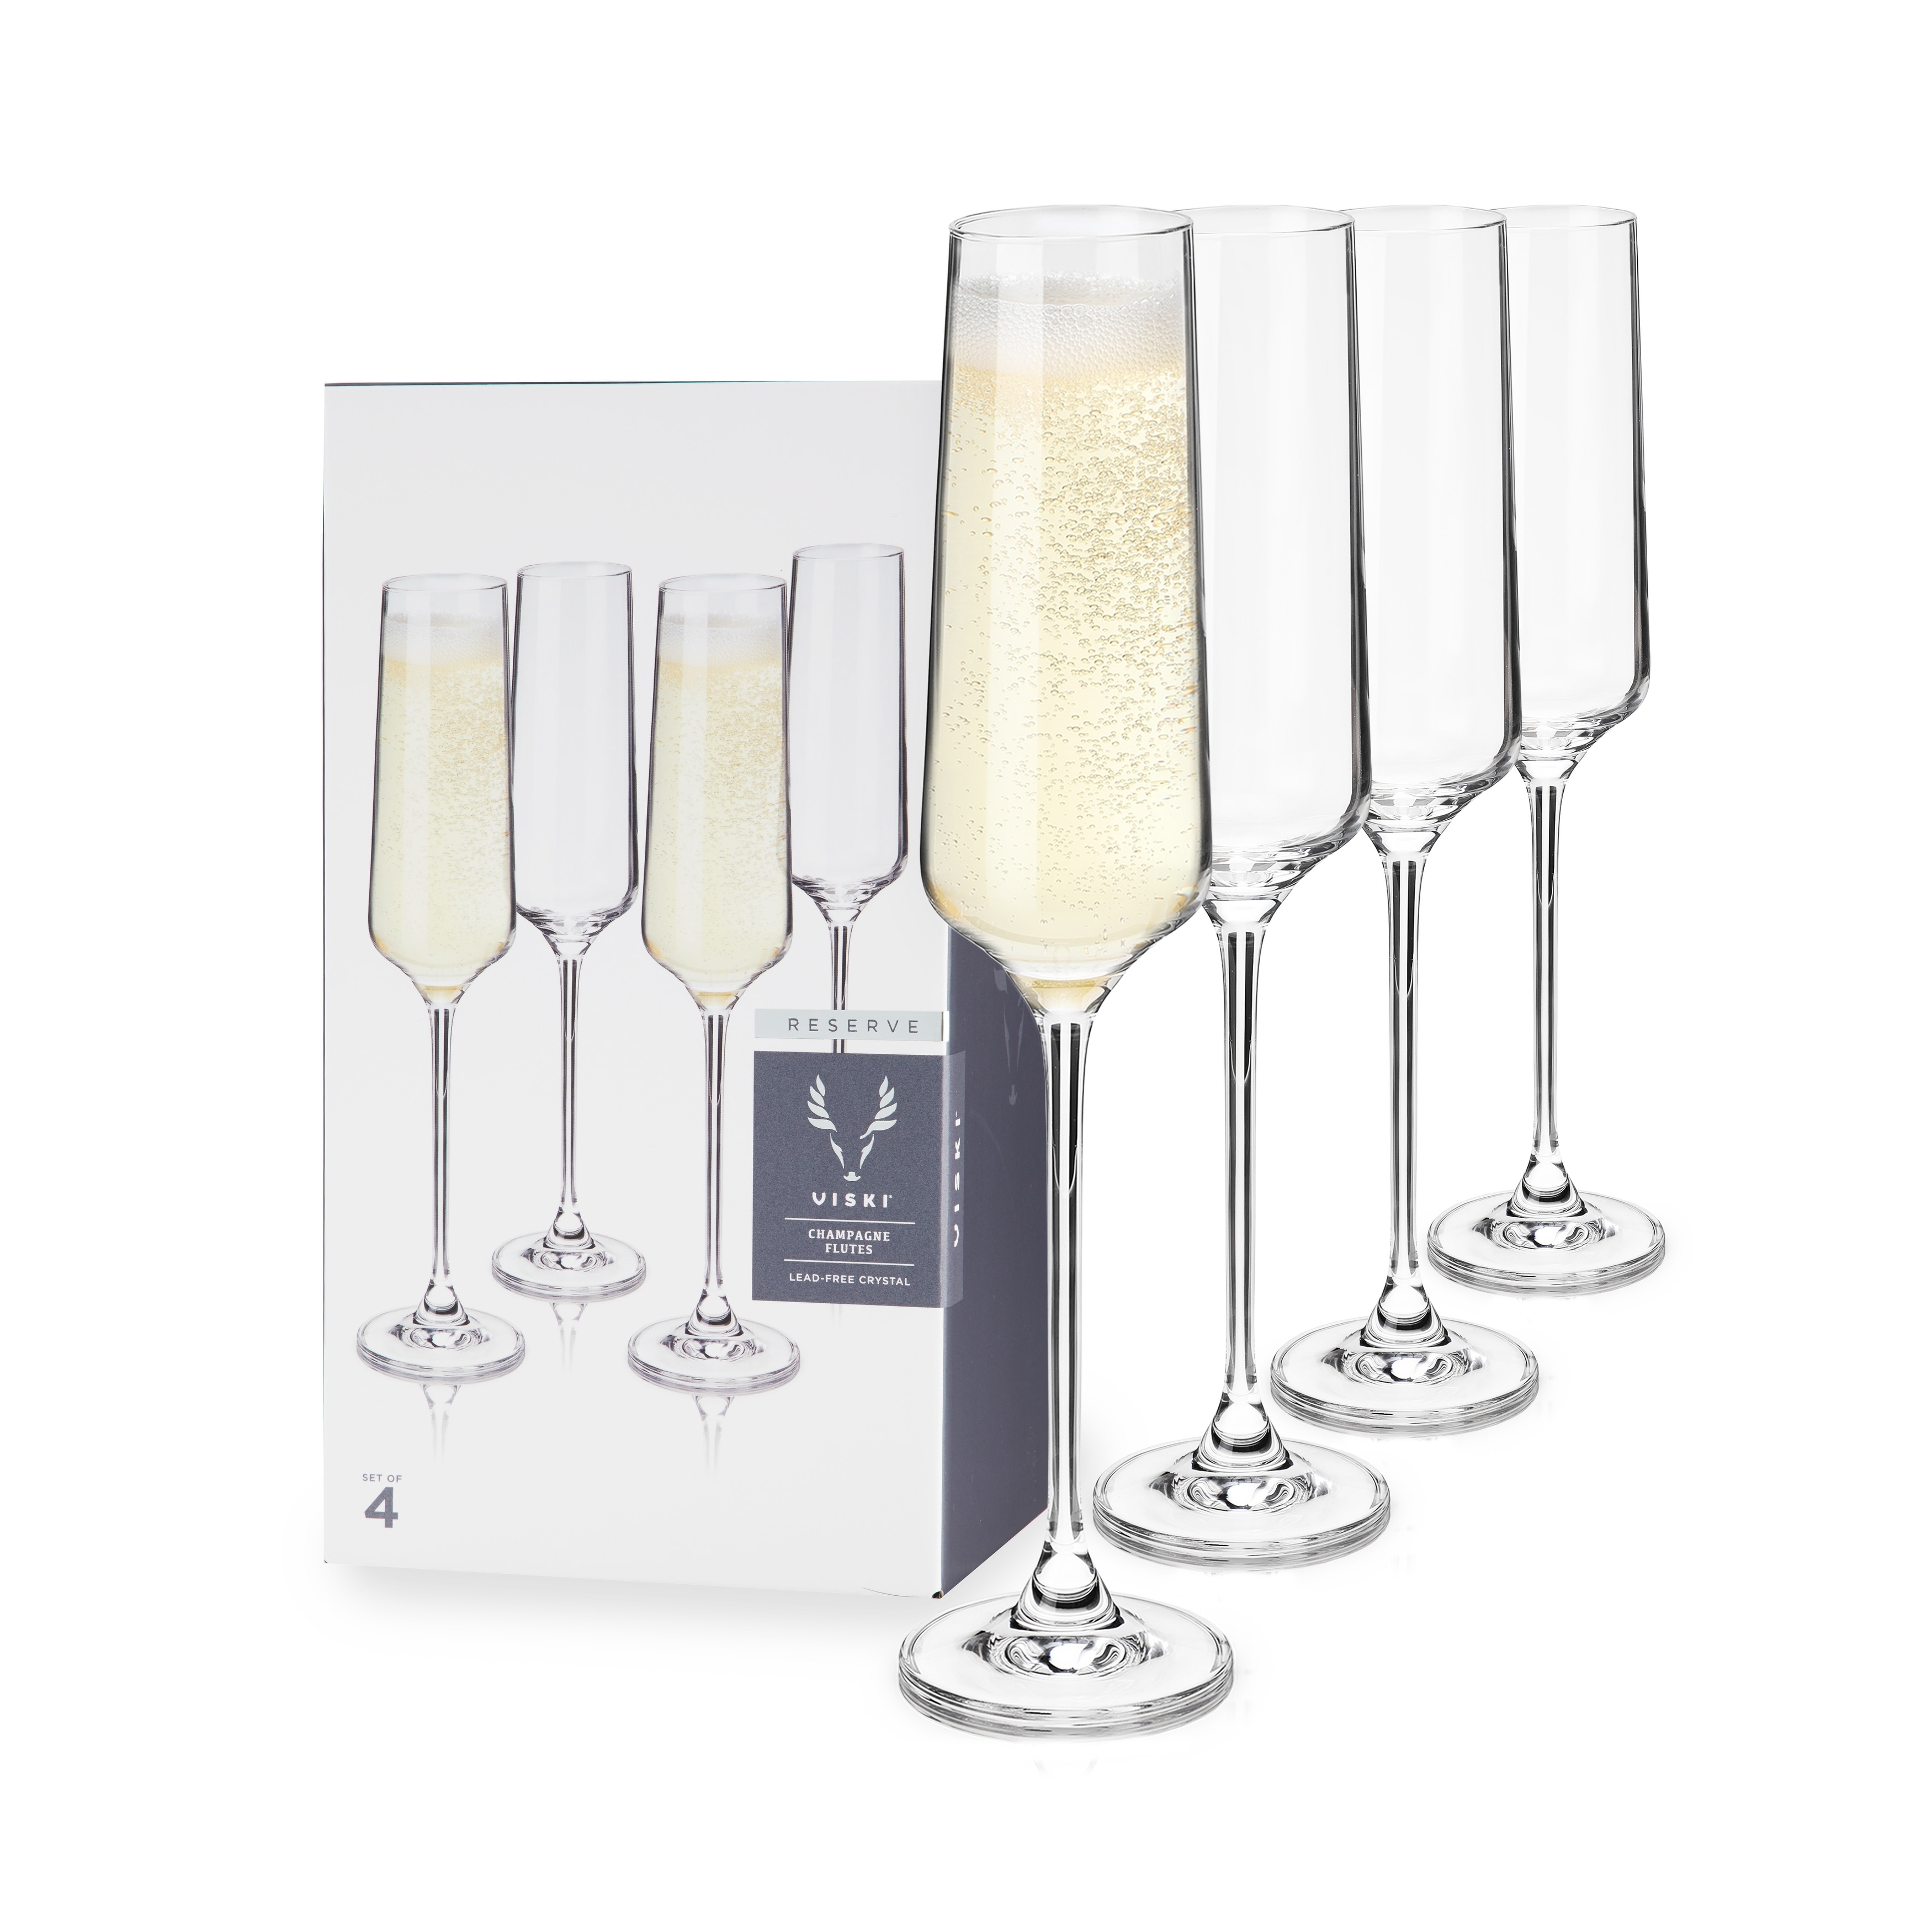 https://ak1.ostkcdn.com/images/products/is/images/direct/abefd08dc6a24326dbb97e8010e9eda60c93df02/Viski-Champagne-Flutes%2C-4-Lead-Free-Crystal-Sparkling-Wine-Glasses%2C-European-Made-Glassware%2C-Set-of-4.jpg